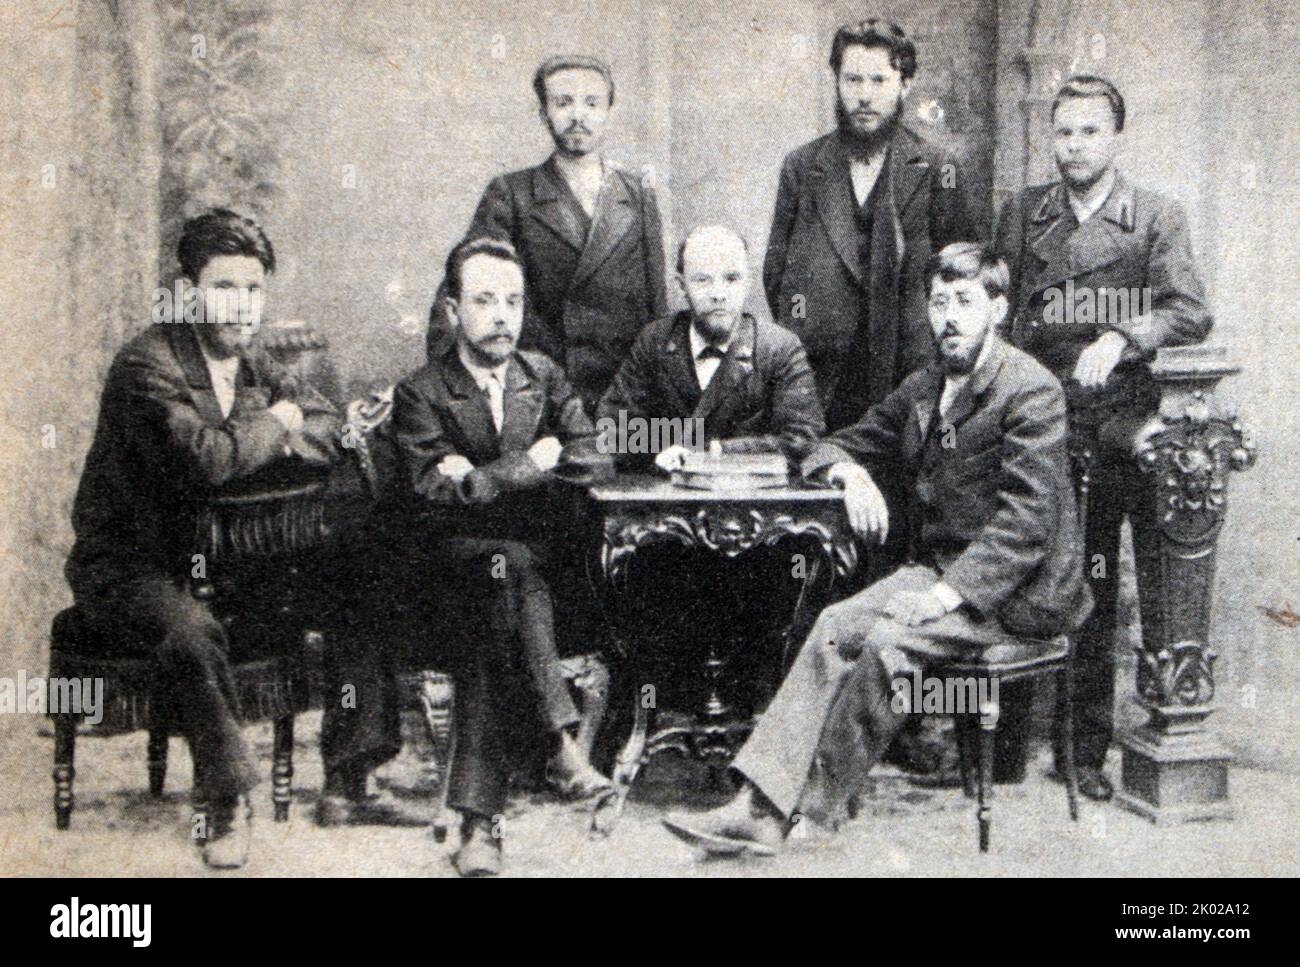 Members of the Union of Struggle for the Liberation of the Working Class (from left to right:) V.V. Starkov, G.M. Krzhizhanovsky, A.L. Malchenko, V.I. Lenin, P.K. Zaporozhets, Yu.O. Martov, A.A. Vaneev. Photo of 1895. Stock Photo